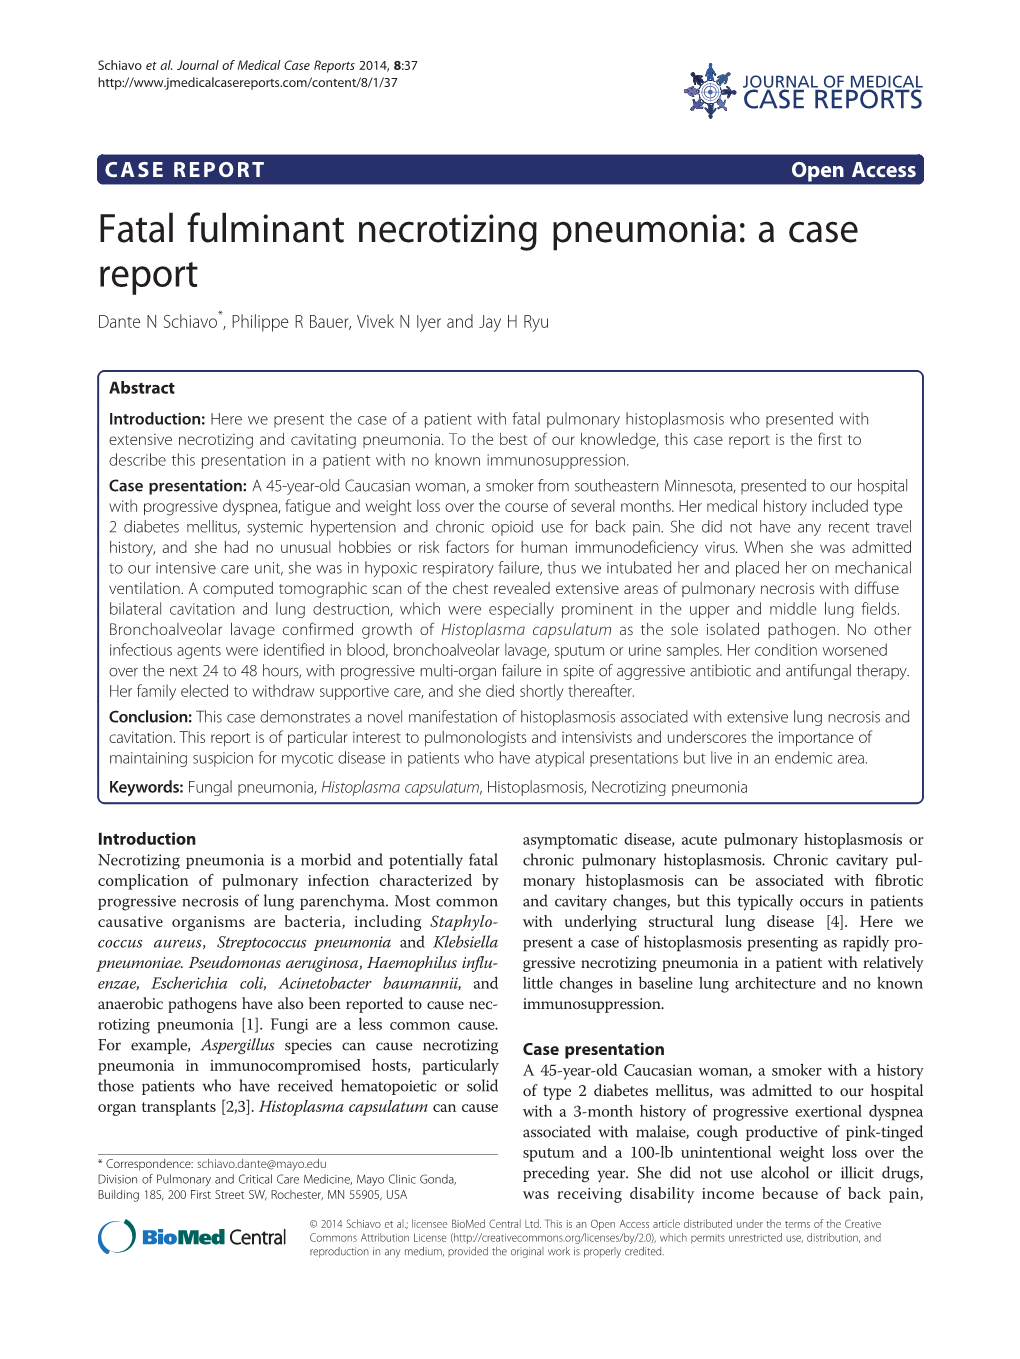 Fatal Fulminant Necrotizing Pneumonia: a Case Report Dante N Schiavo*, Philippe R Bauer, Vivek N Iyer and Jay H Ryu